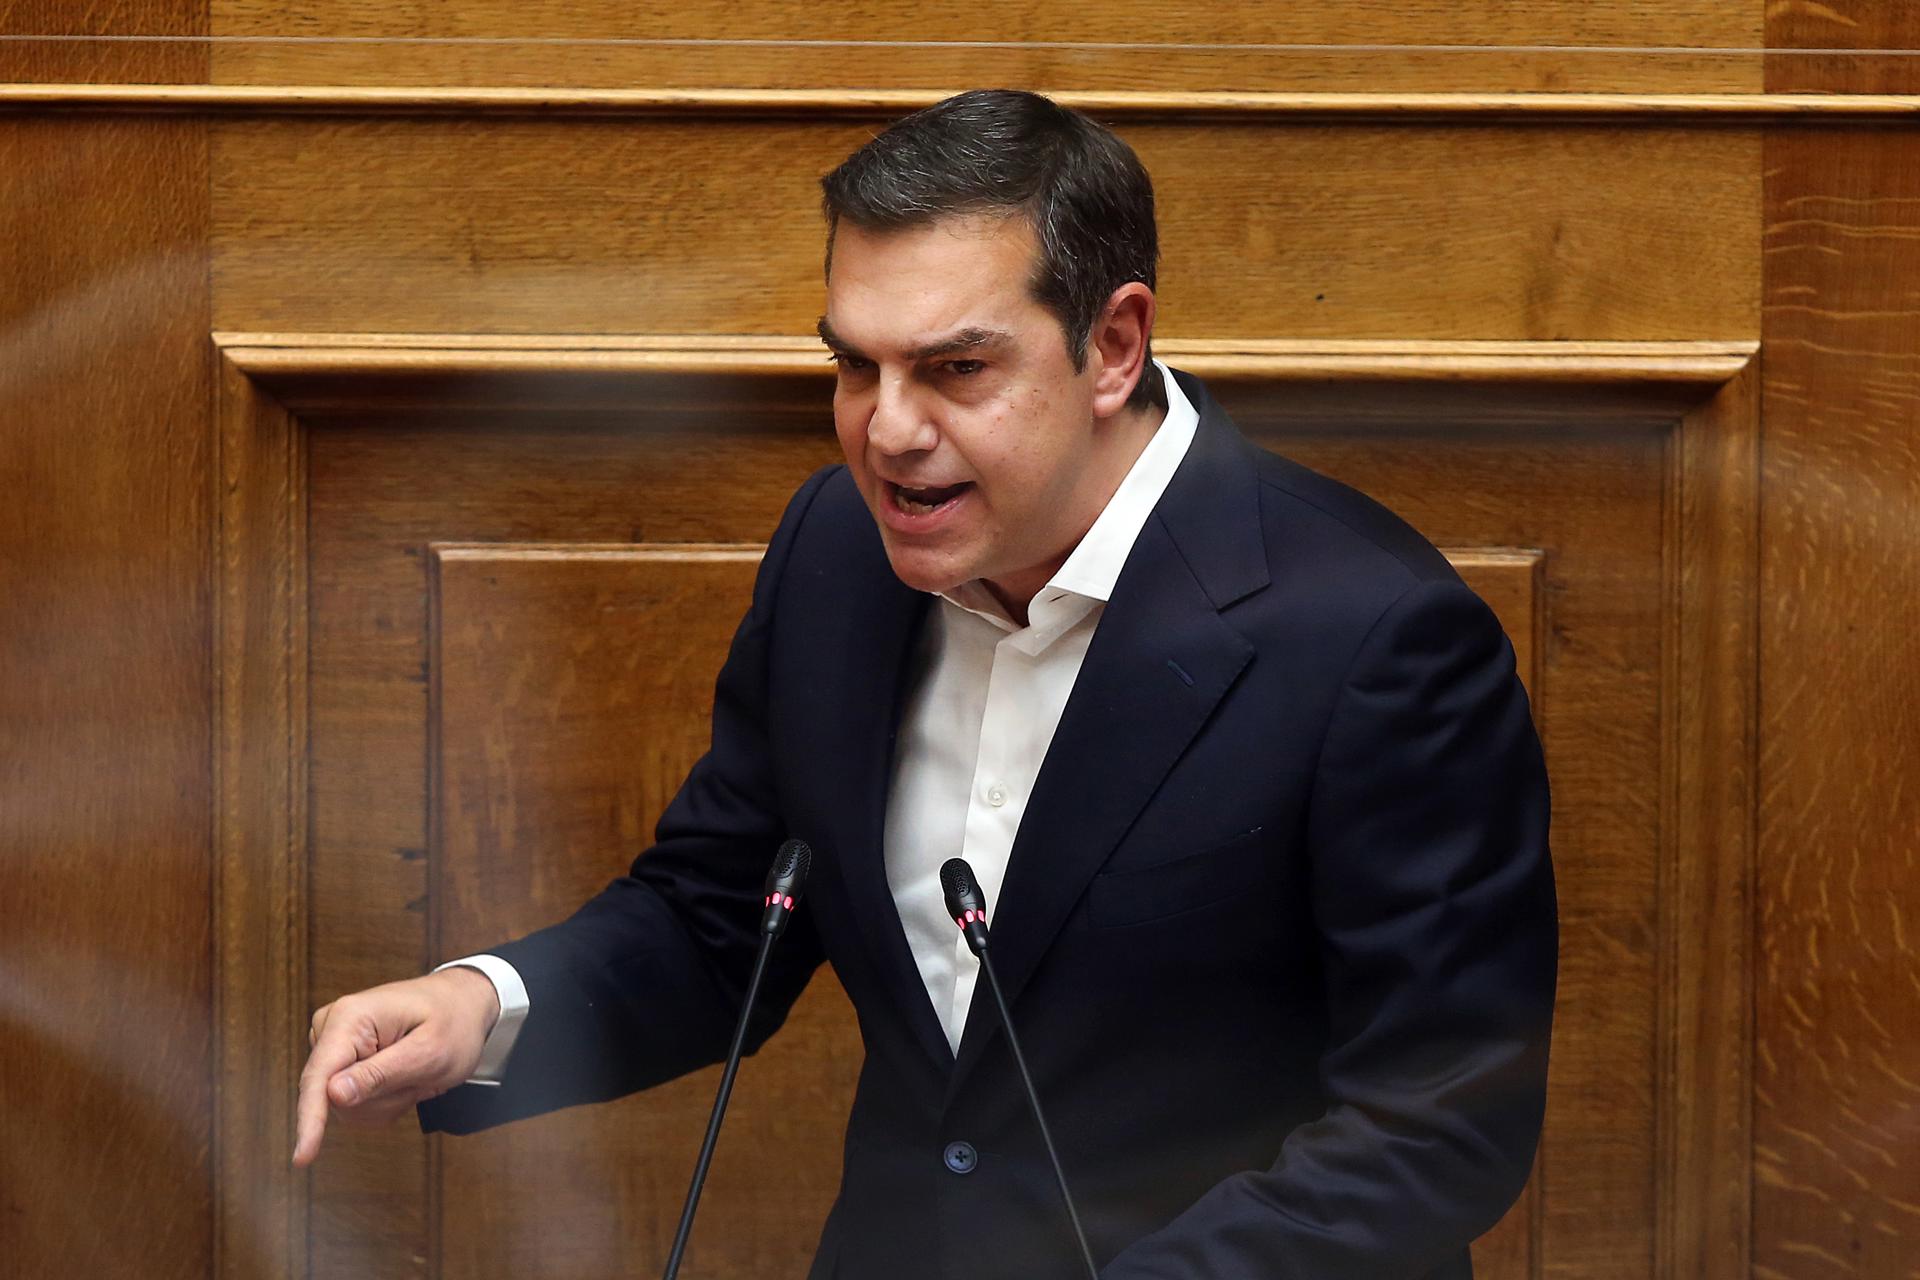 Imagen de Archivo del exprimer ministro de Grecia Alexis Tsipras, líder del opositor e izquierdista Syriza.
EFE/EPA/ORESTIS PANAGIOTOU